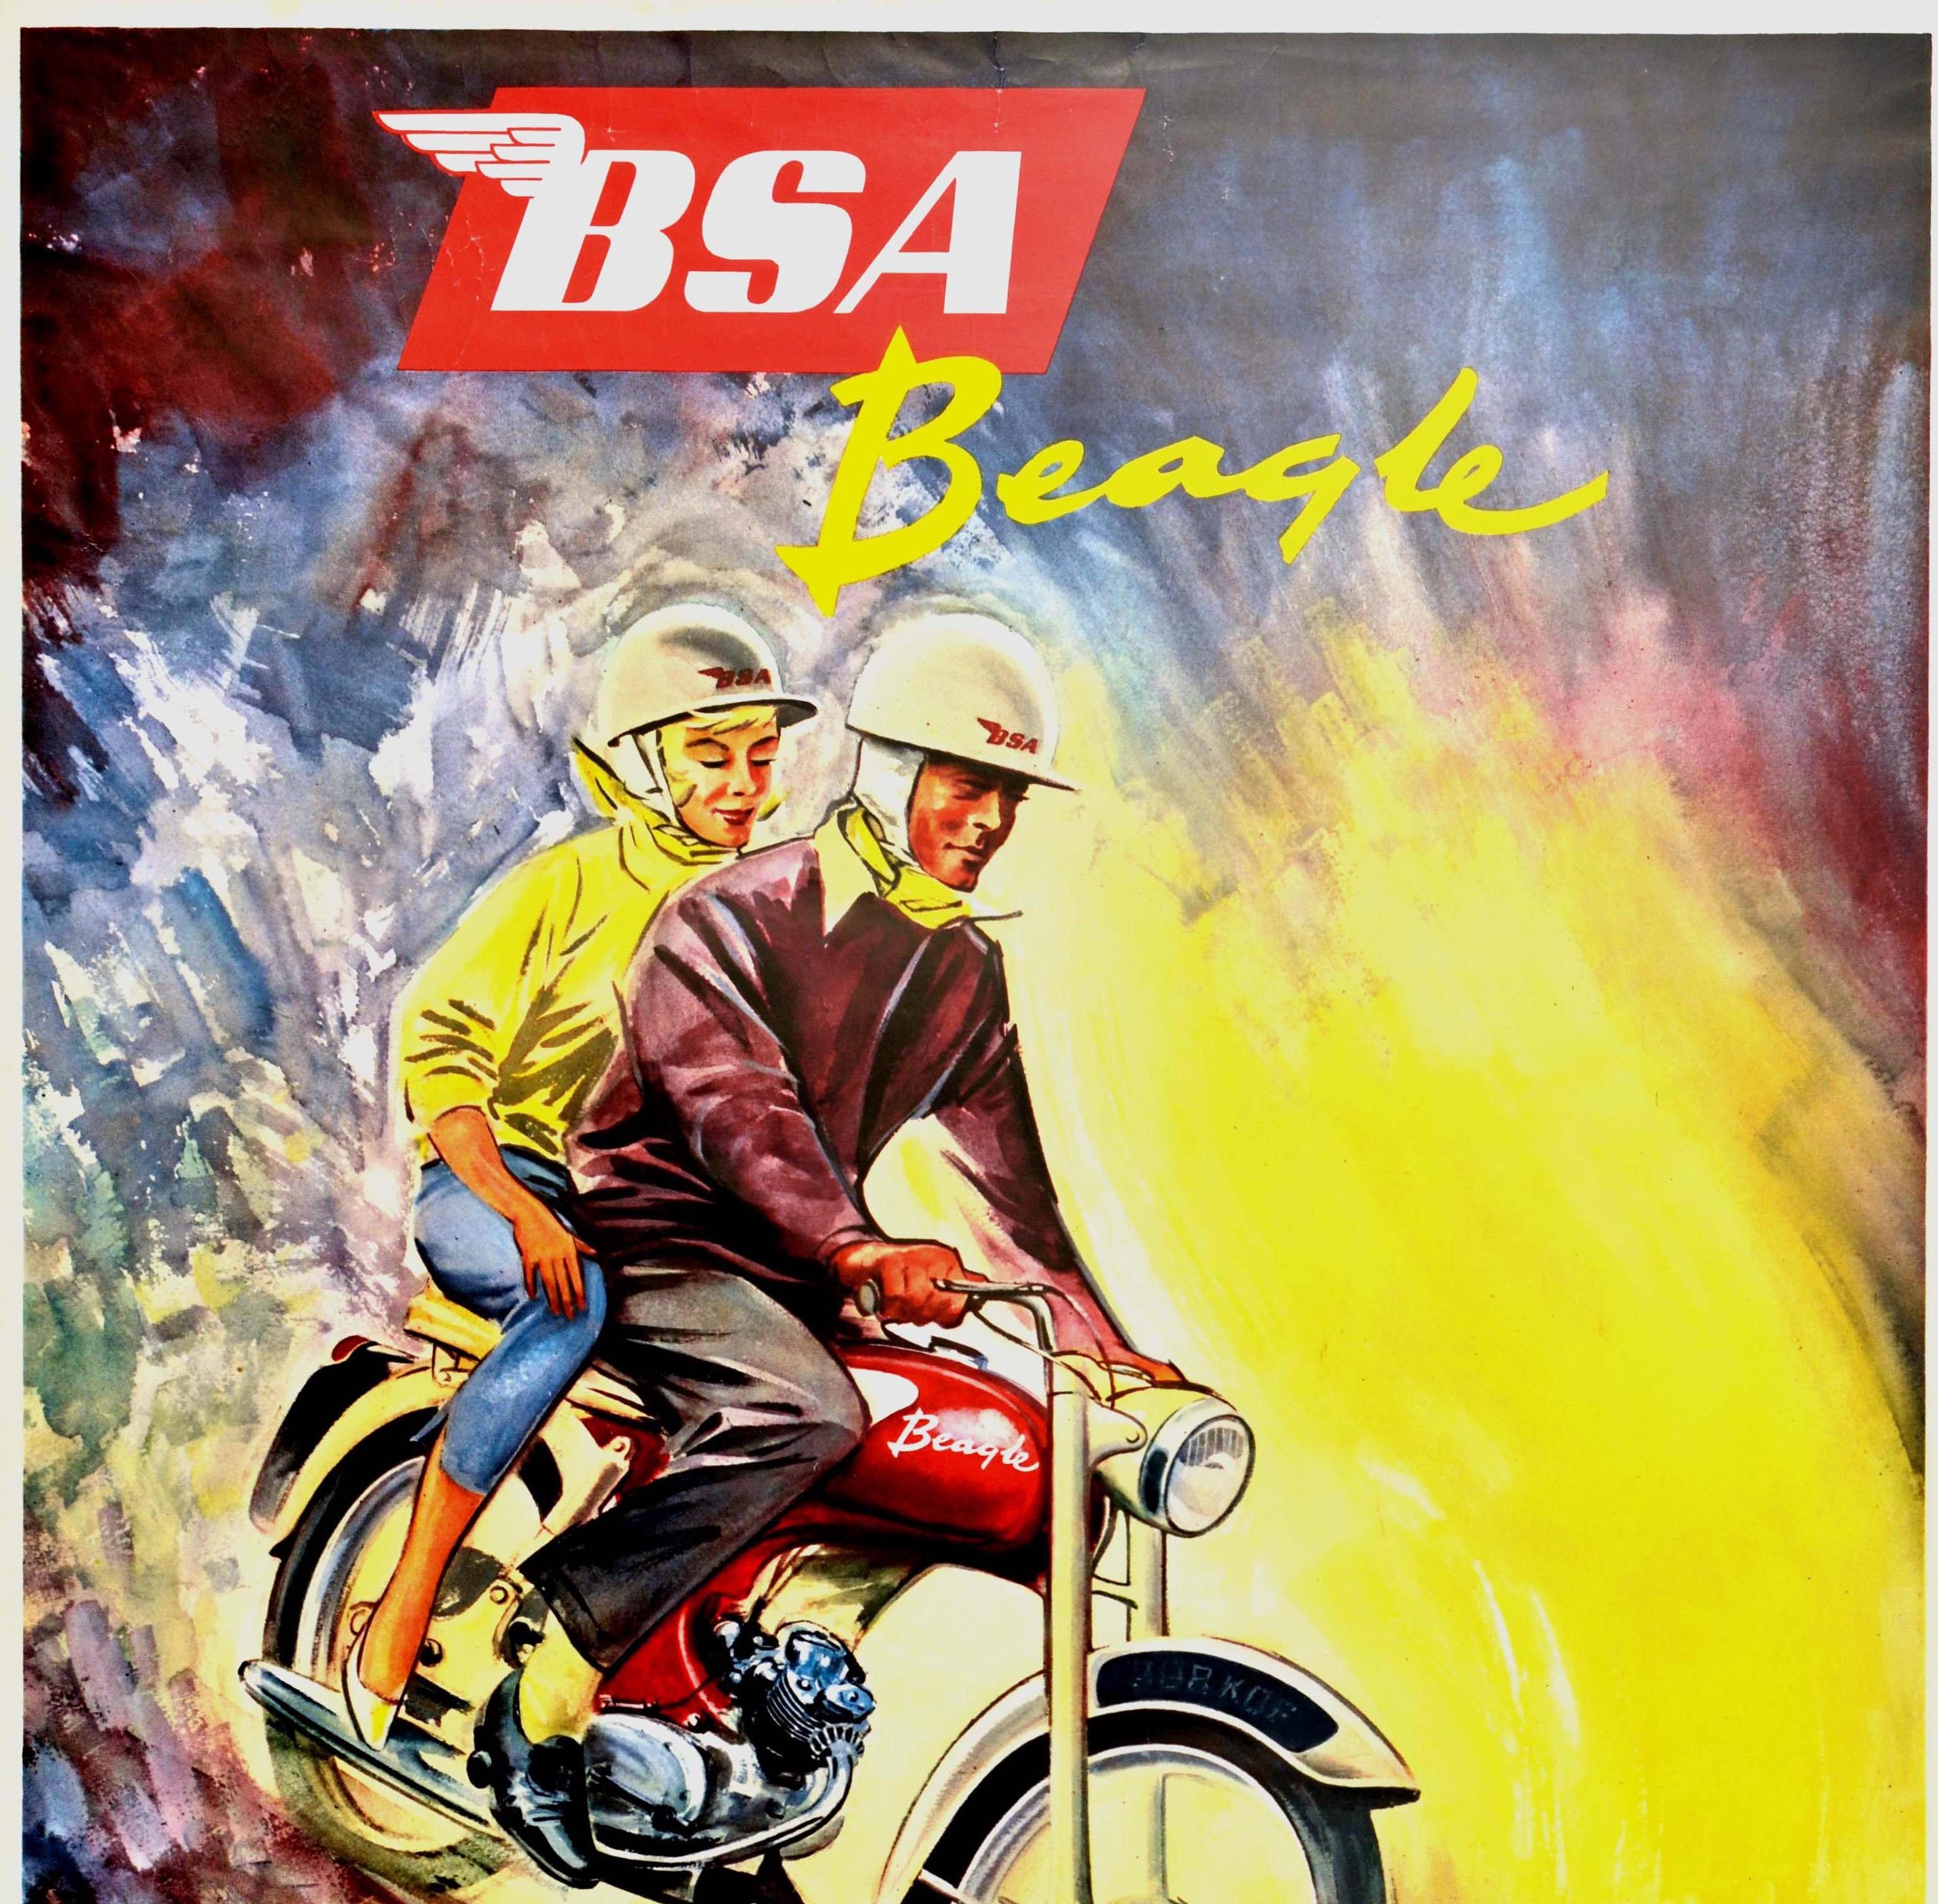 Original Vintage Poster BSA Beagle Motorcycle Art Ultra Lightweight 75cc Engine - Print by Unknown